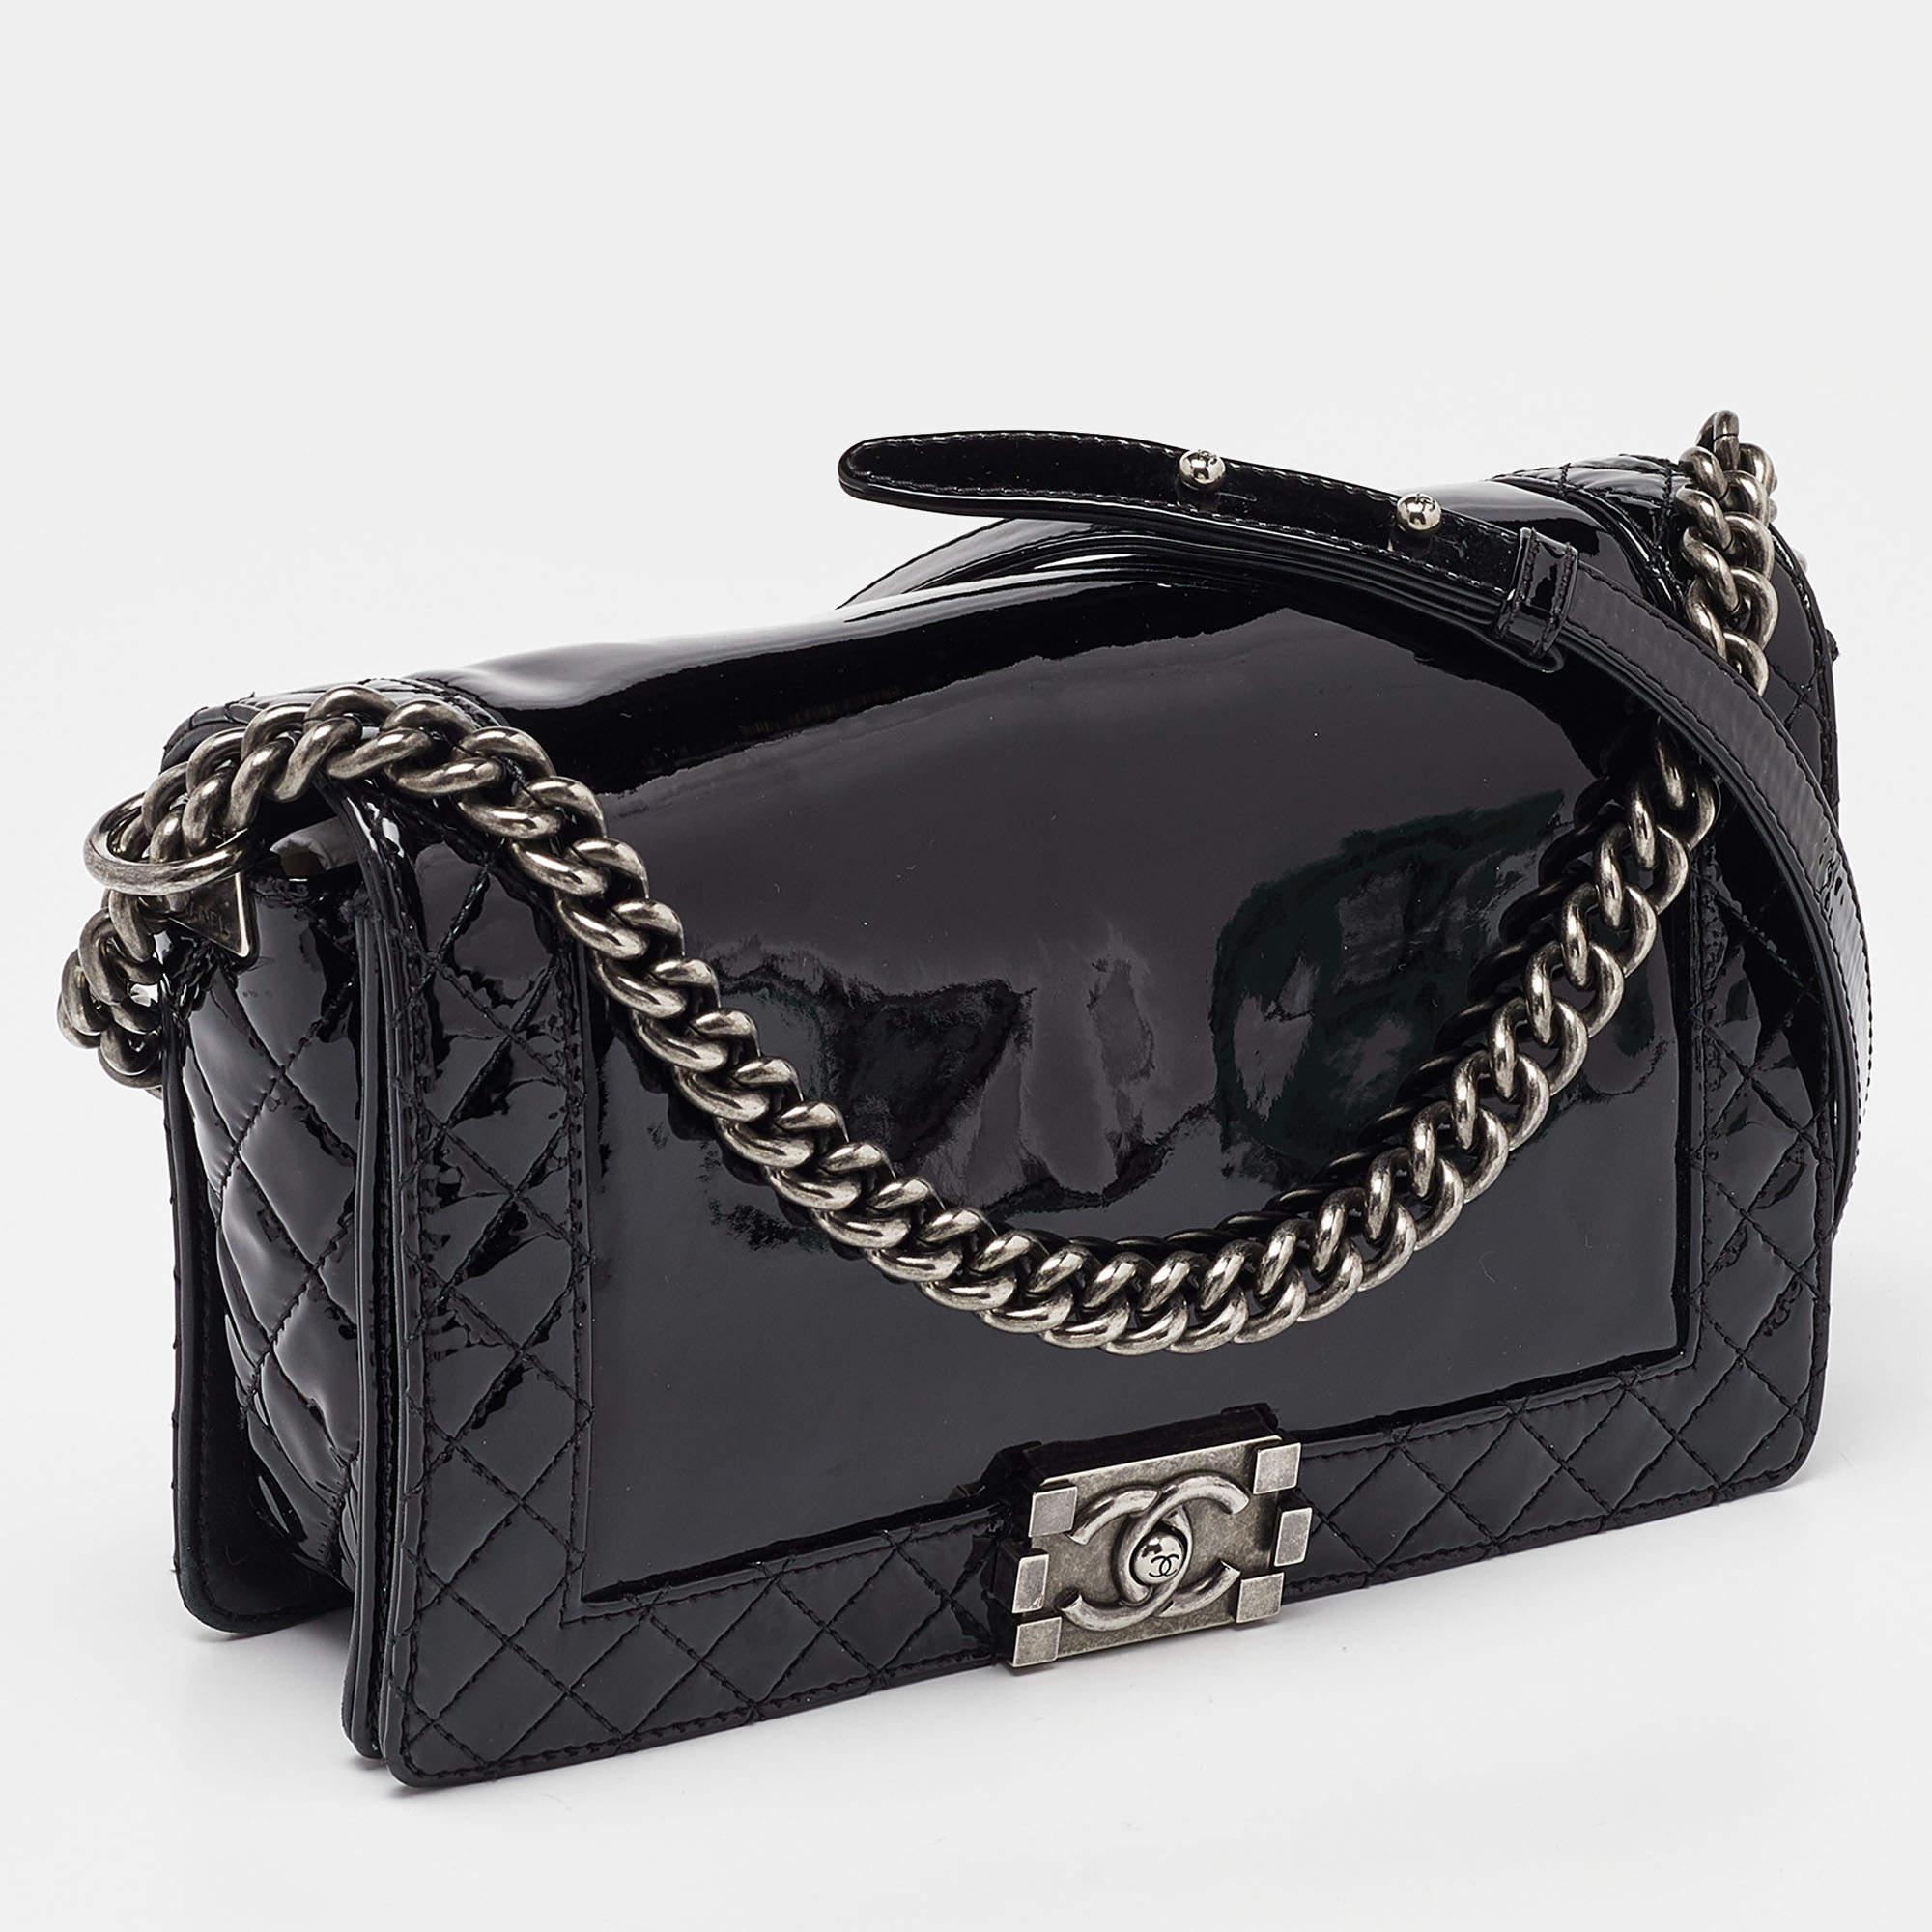 Chanel Black Patent Leather New Medium Reverso Boy Flap Bag In Good Condition For Sale In Dubai, Al Qouz 2